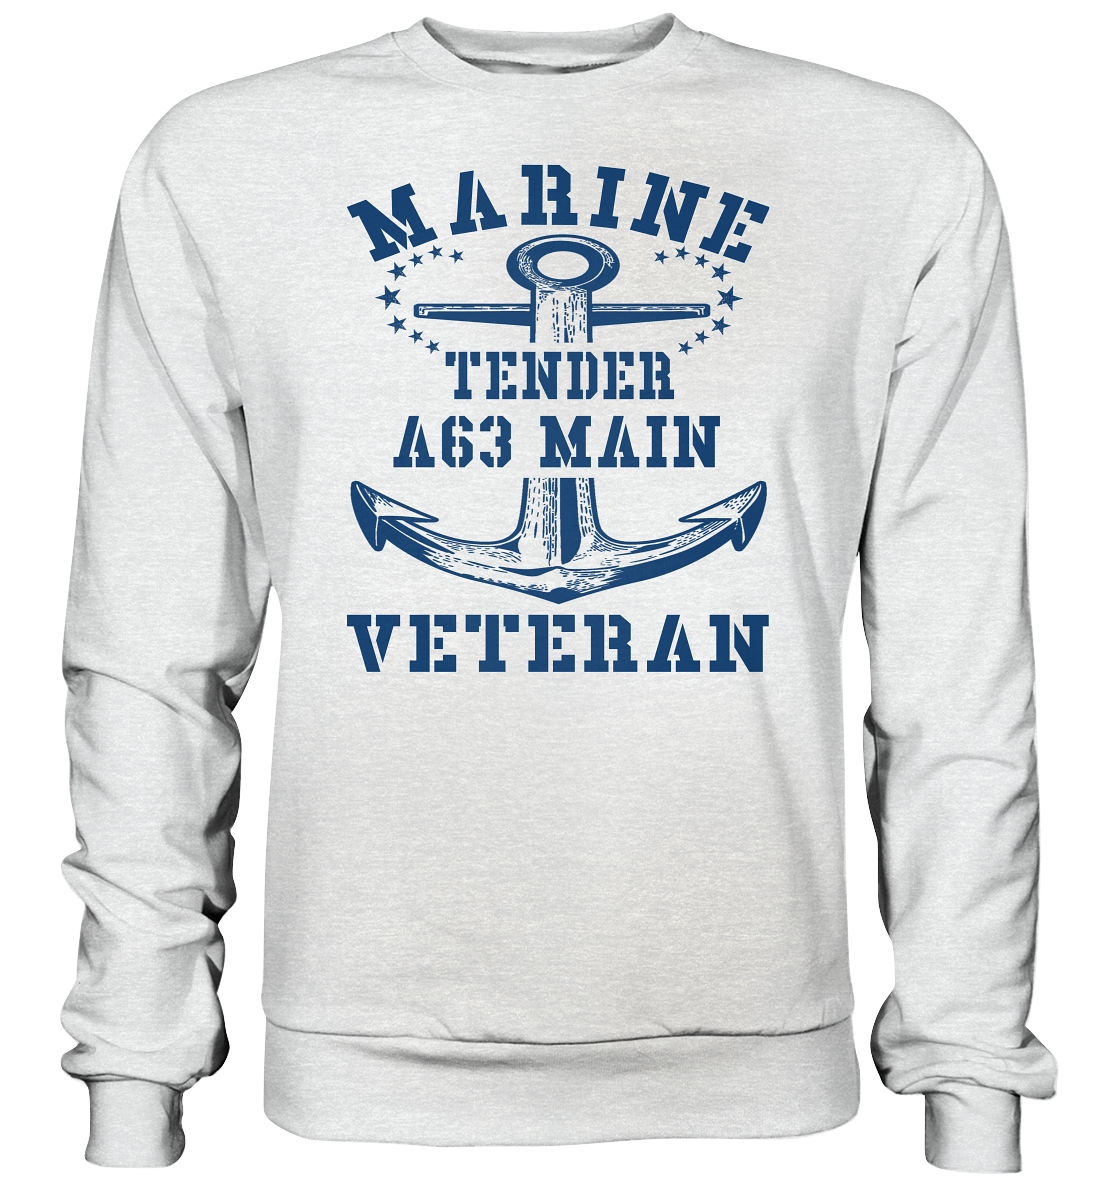 Tender A63 MAIN Marine Veteran - Premium Sweatshirt